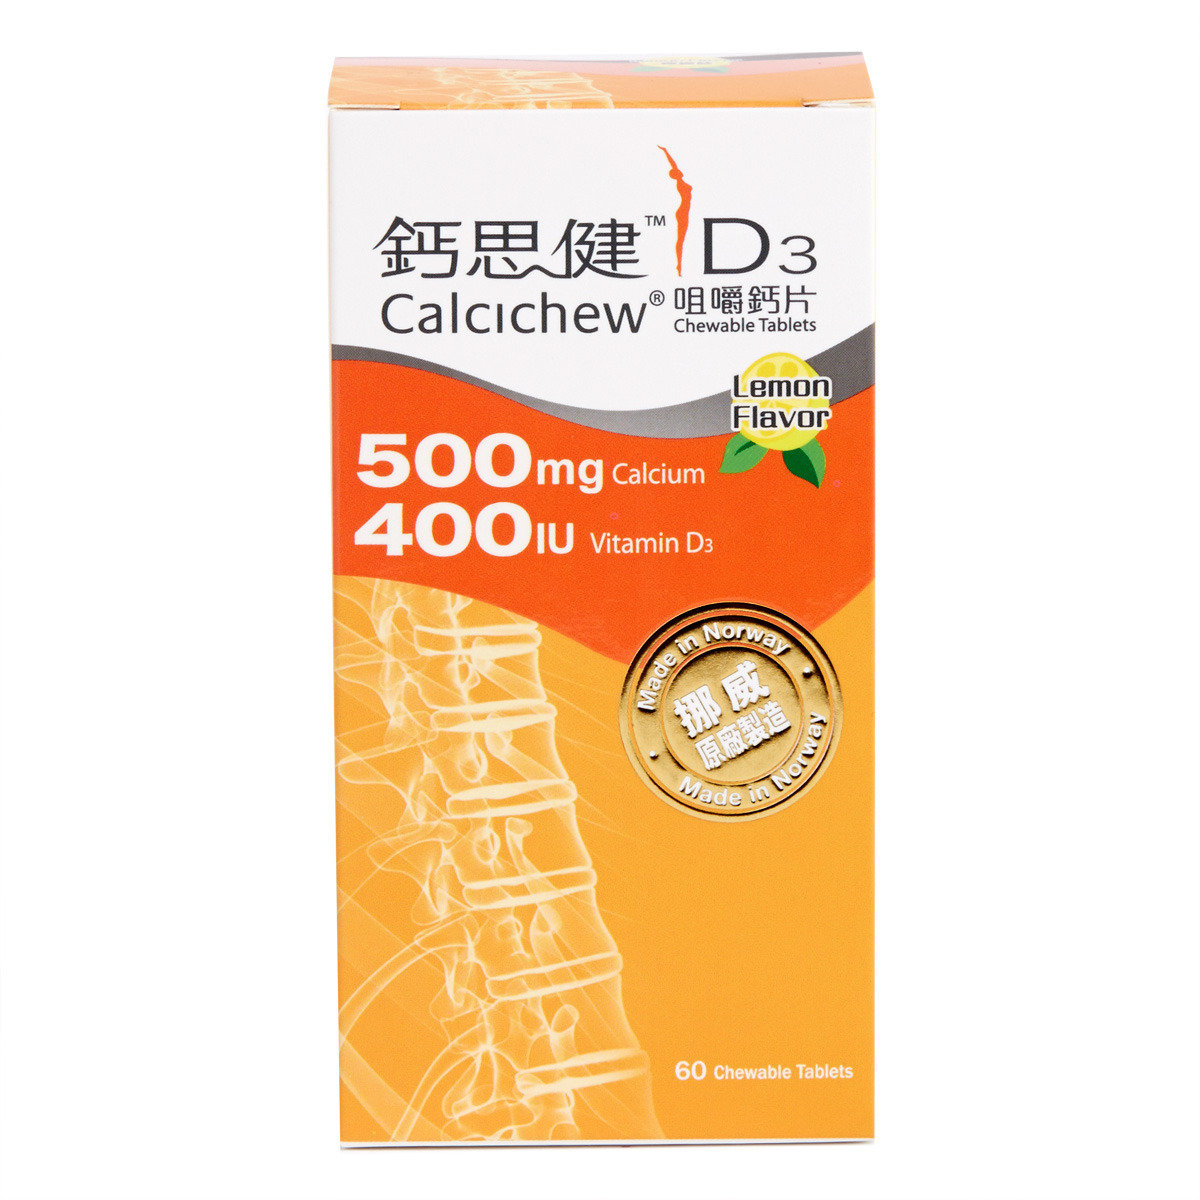 Calcichew D3咀嚼鈣片 (500mg鈣+400IU維他命D3)